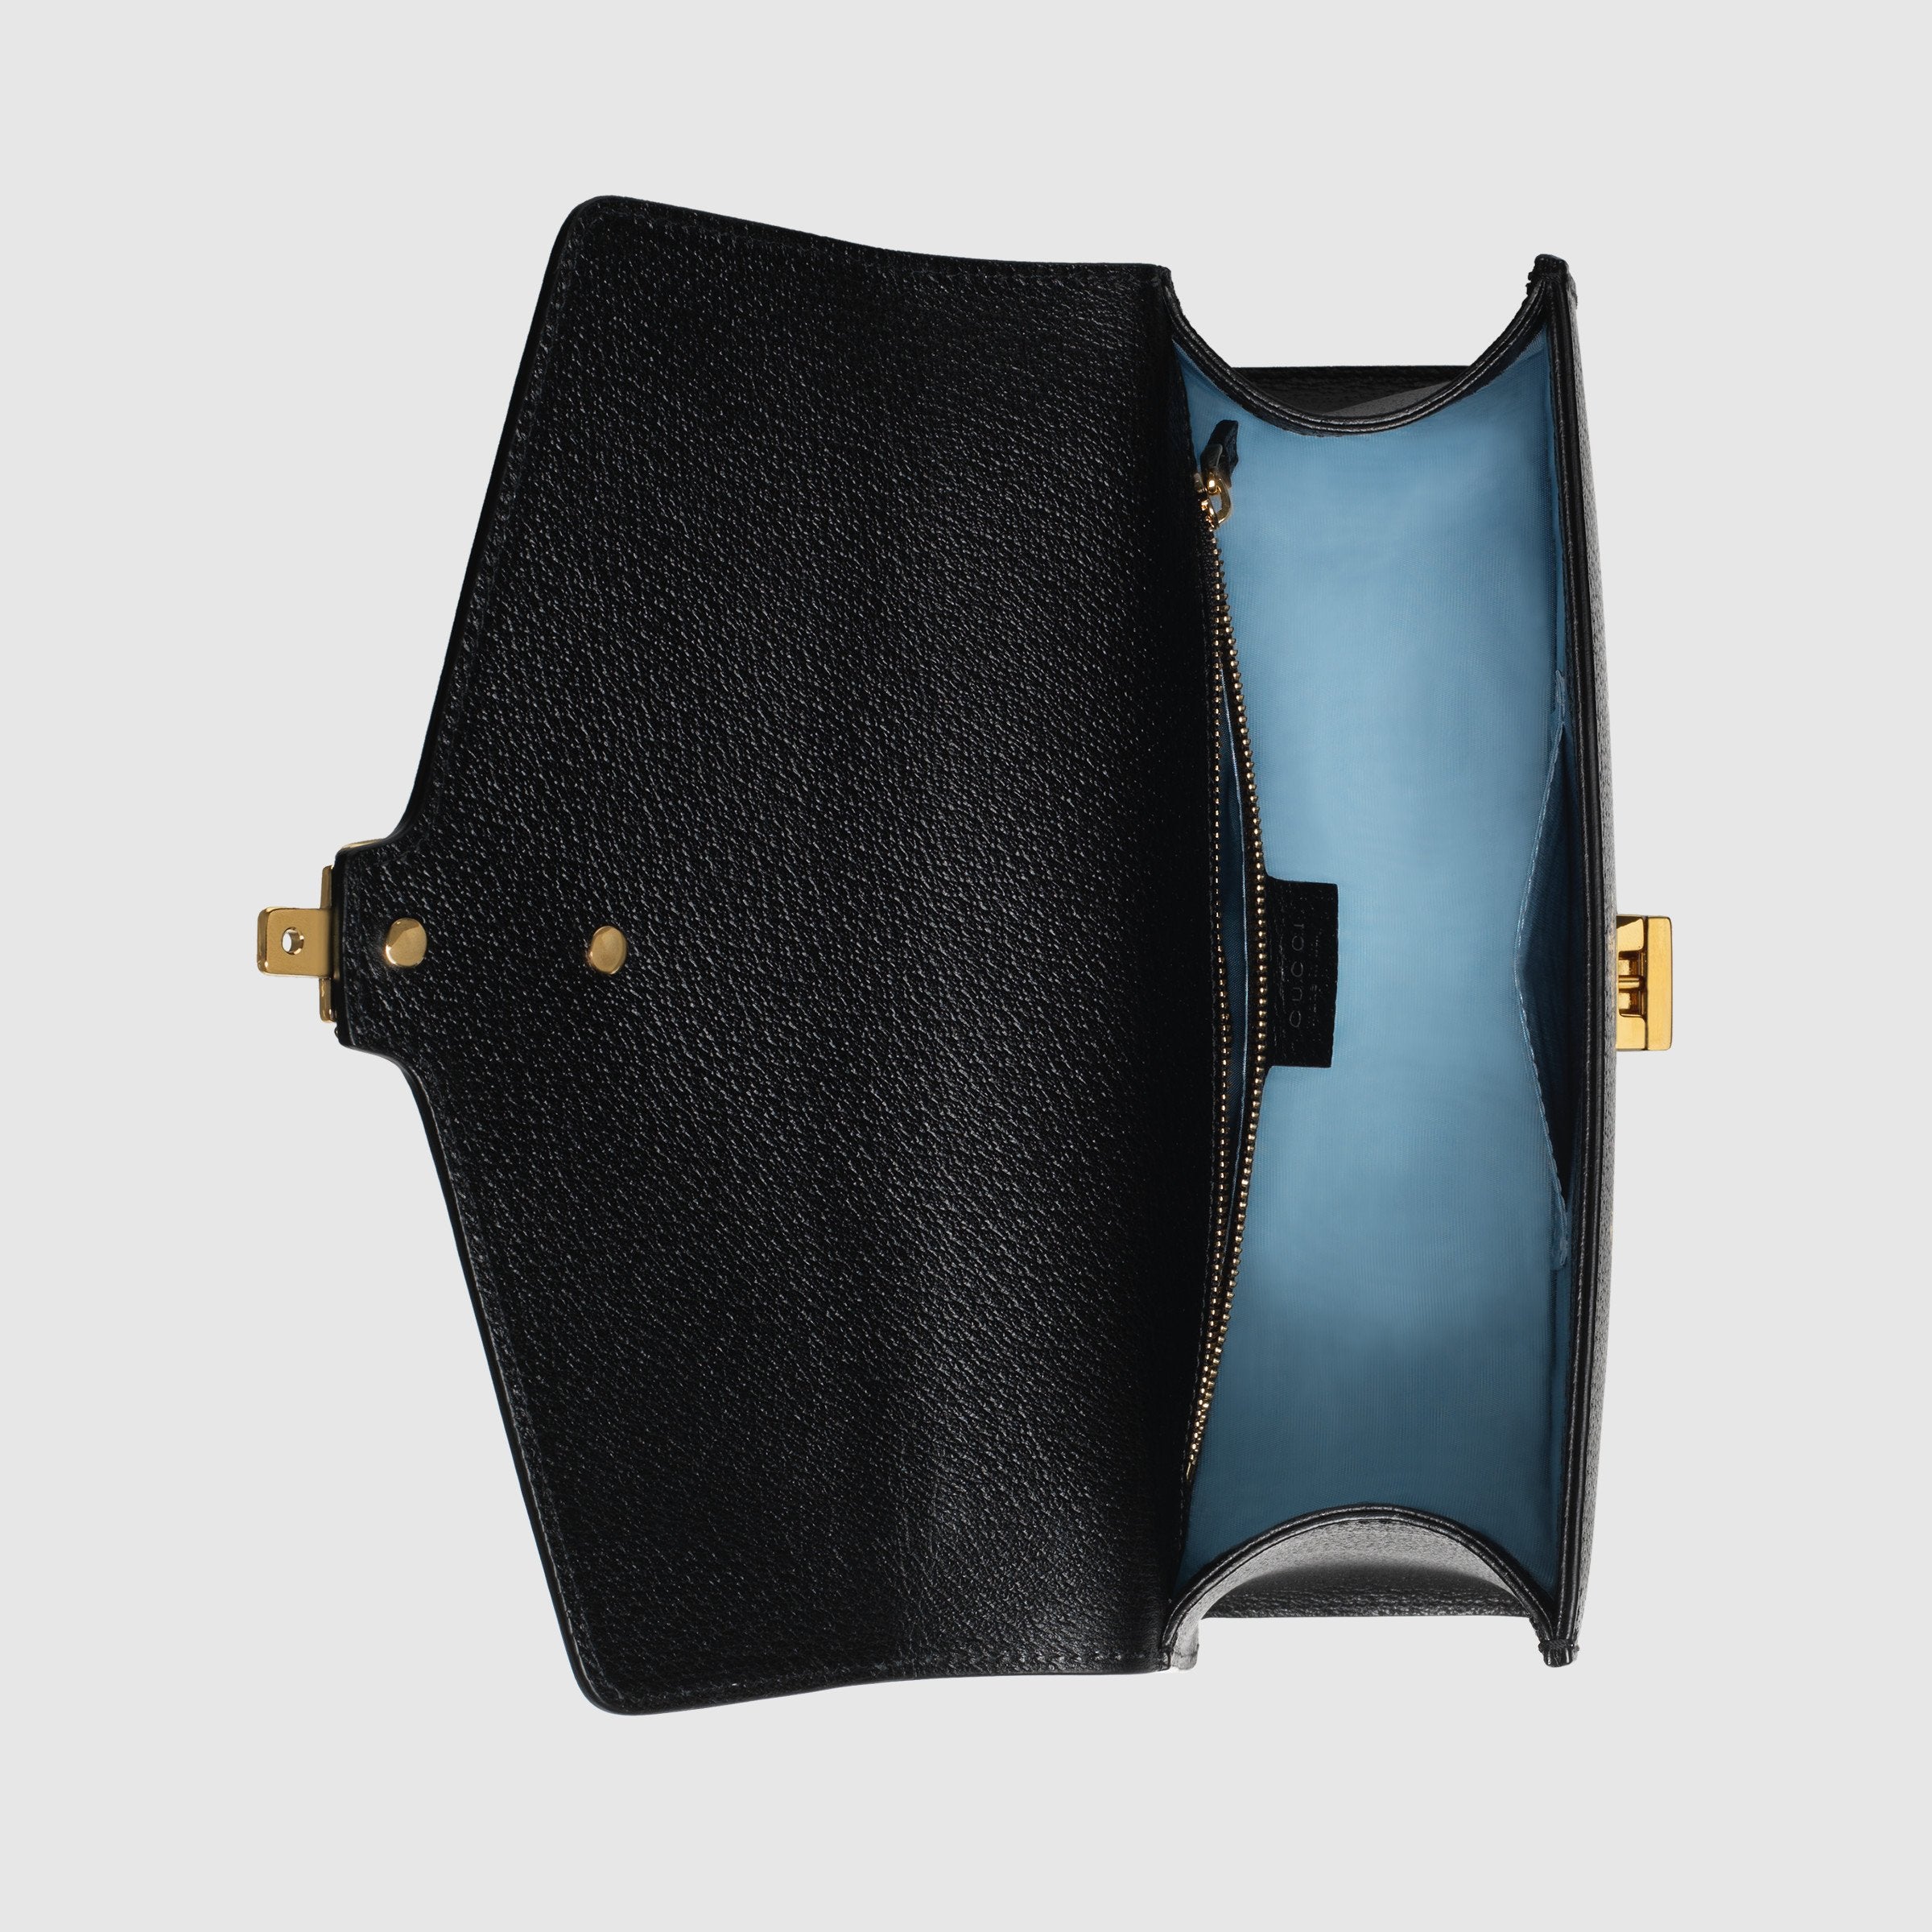 Gucci Sylvie Bee Star Small Shoulder Bag Black